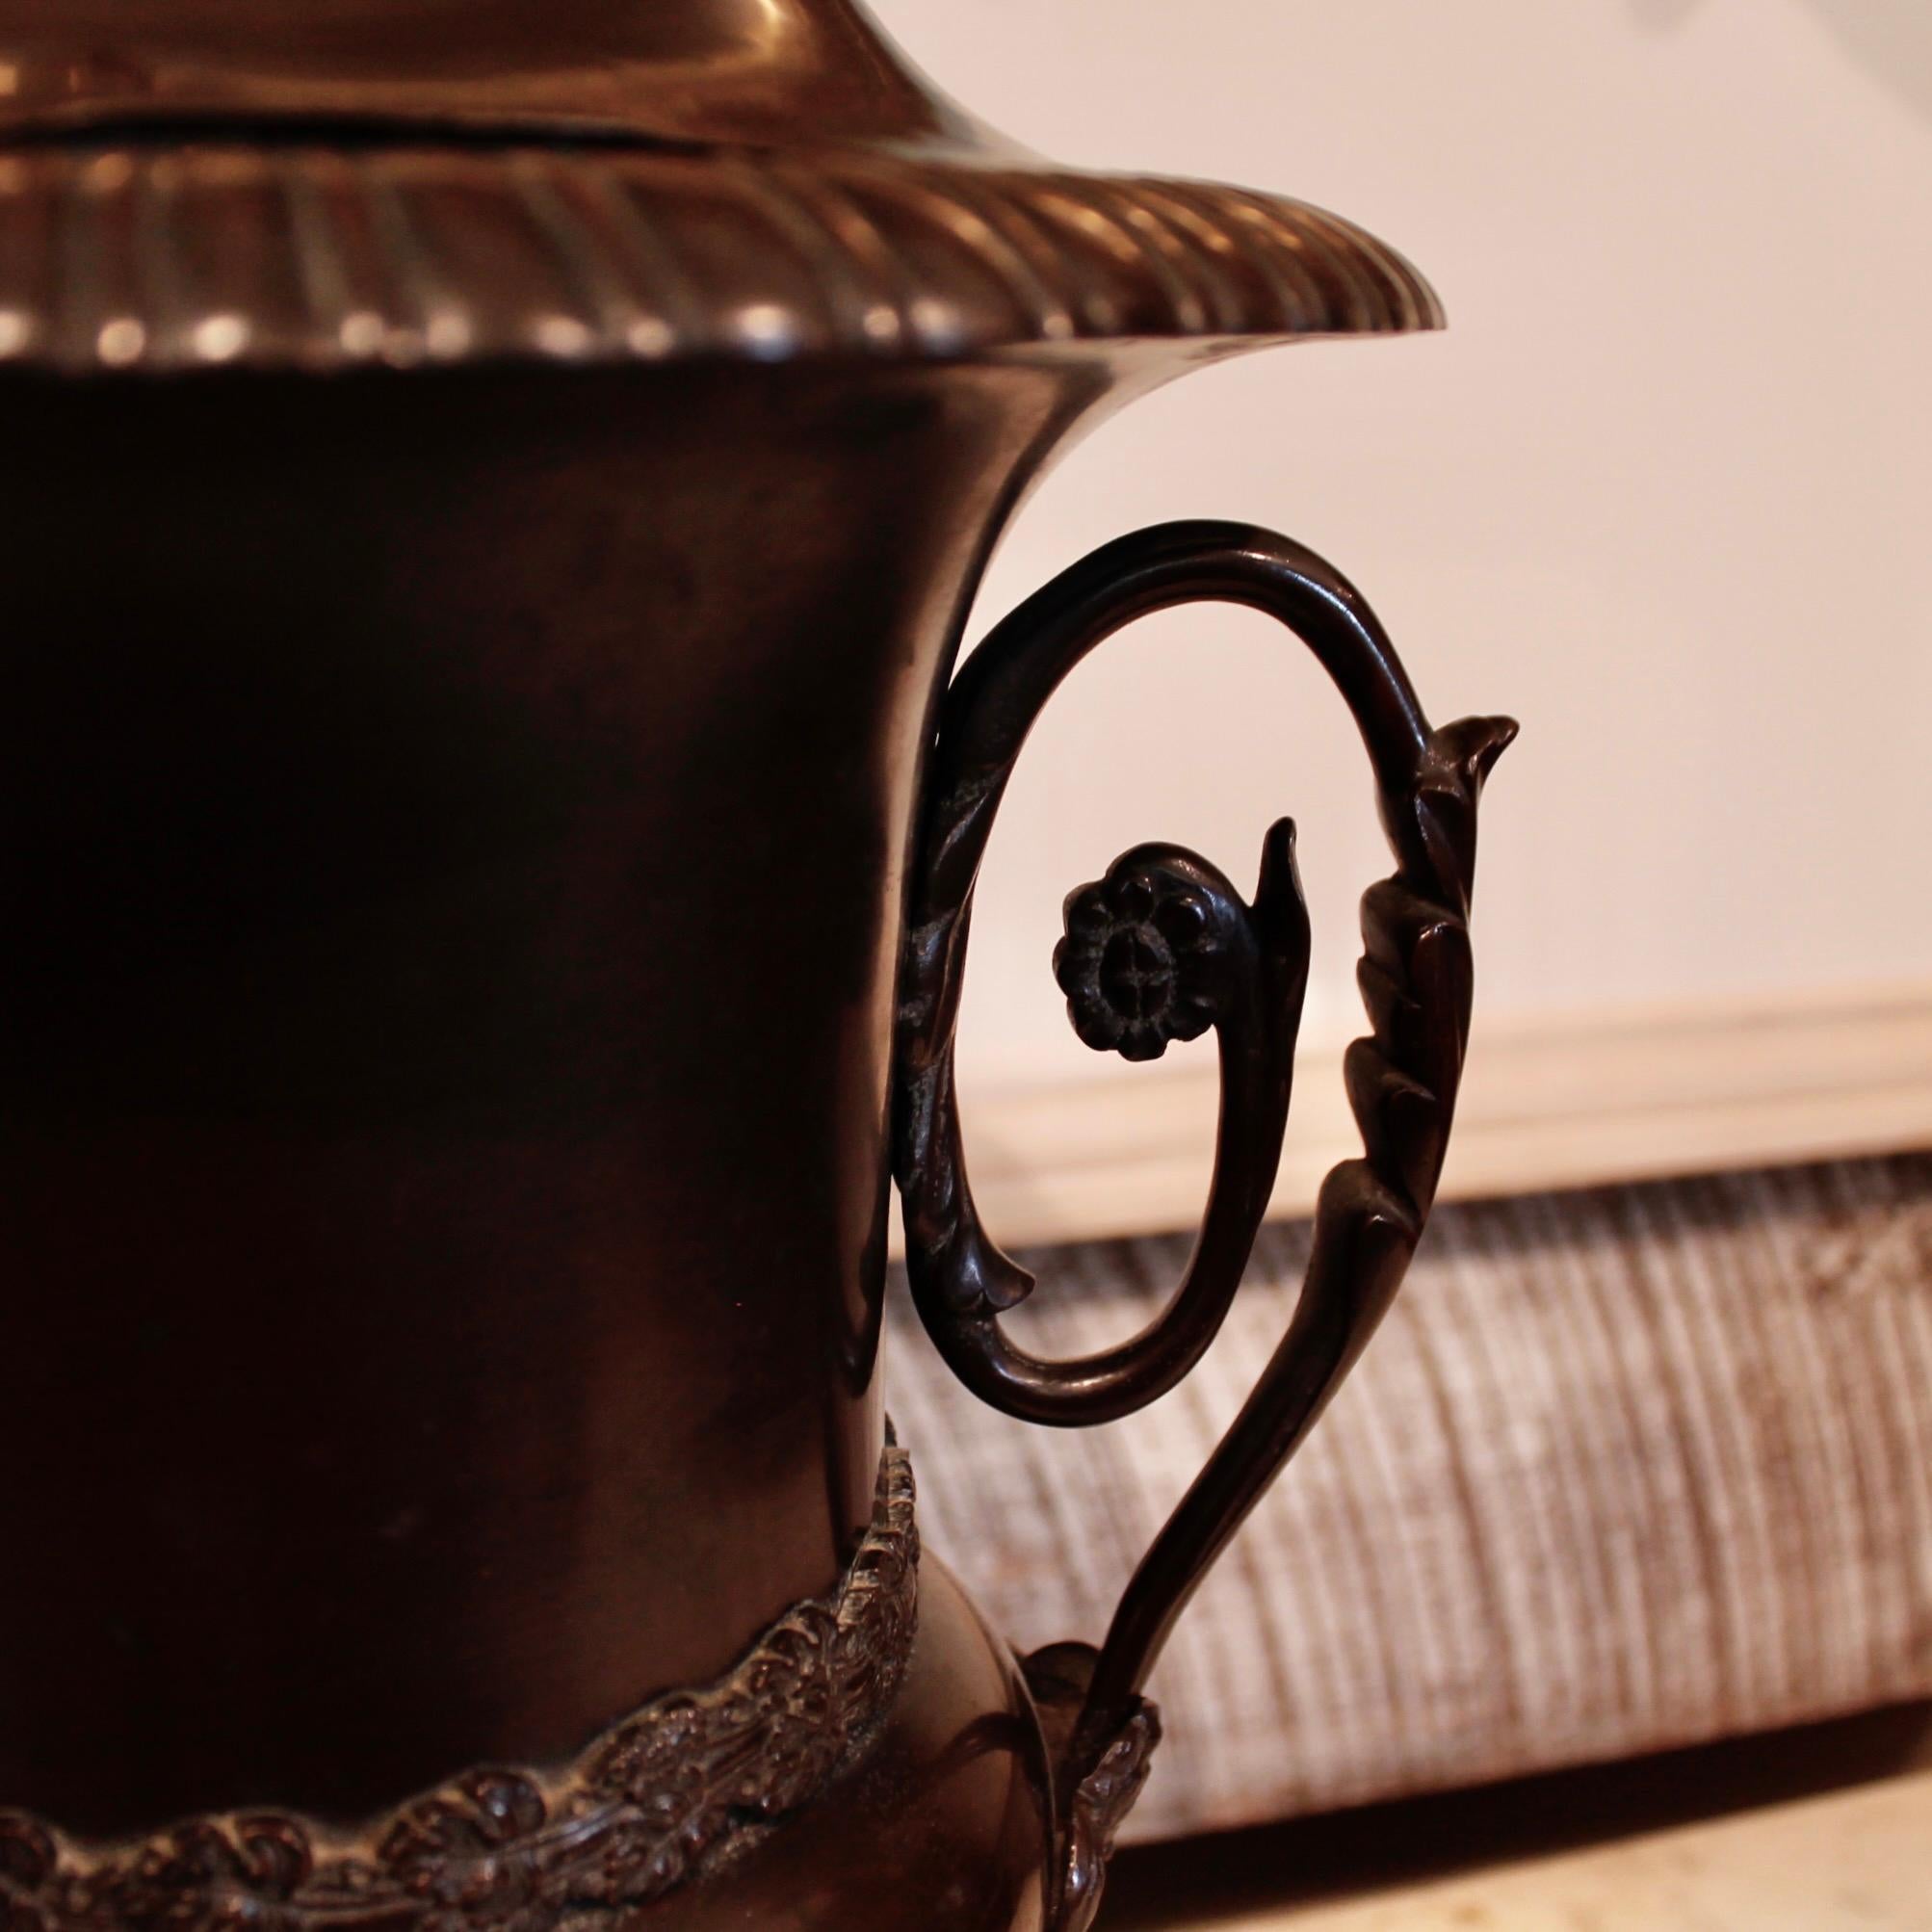 English Antique Regency Period Copper Hot Water Urn (Samovar) For Sale 1